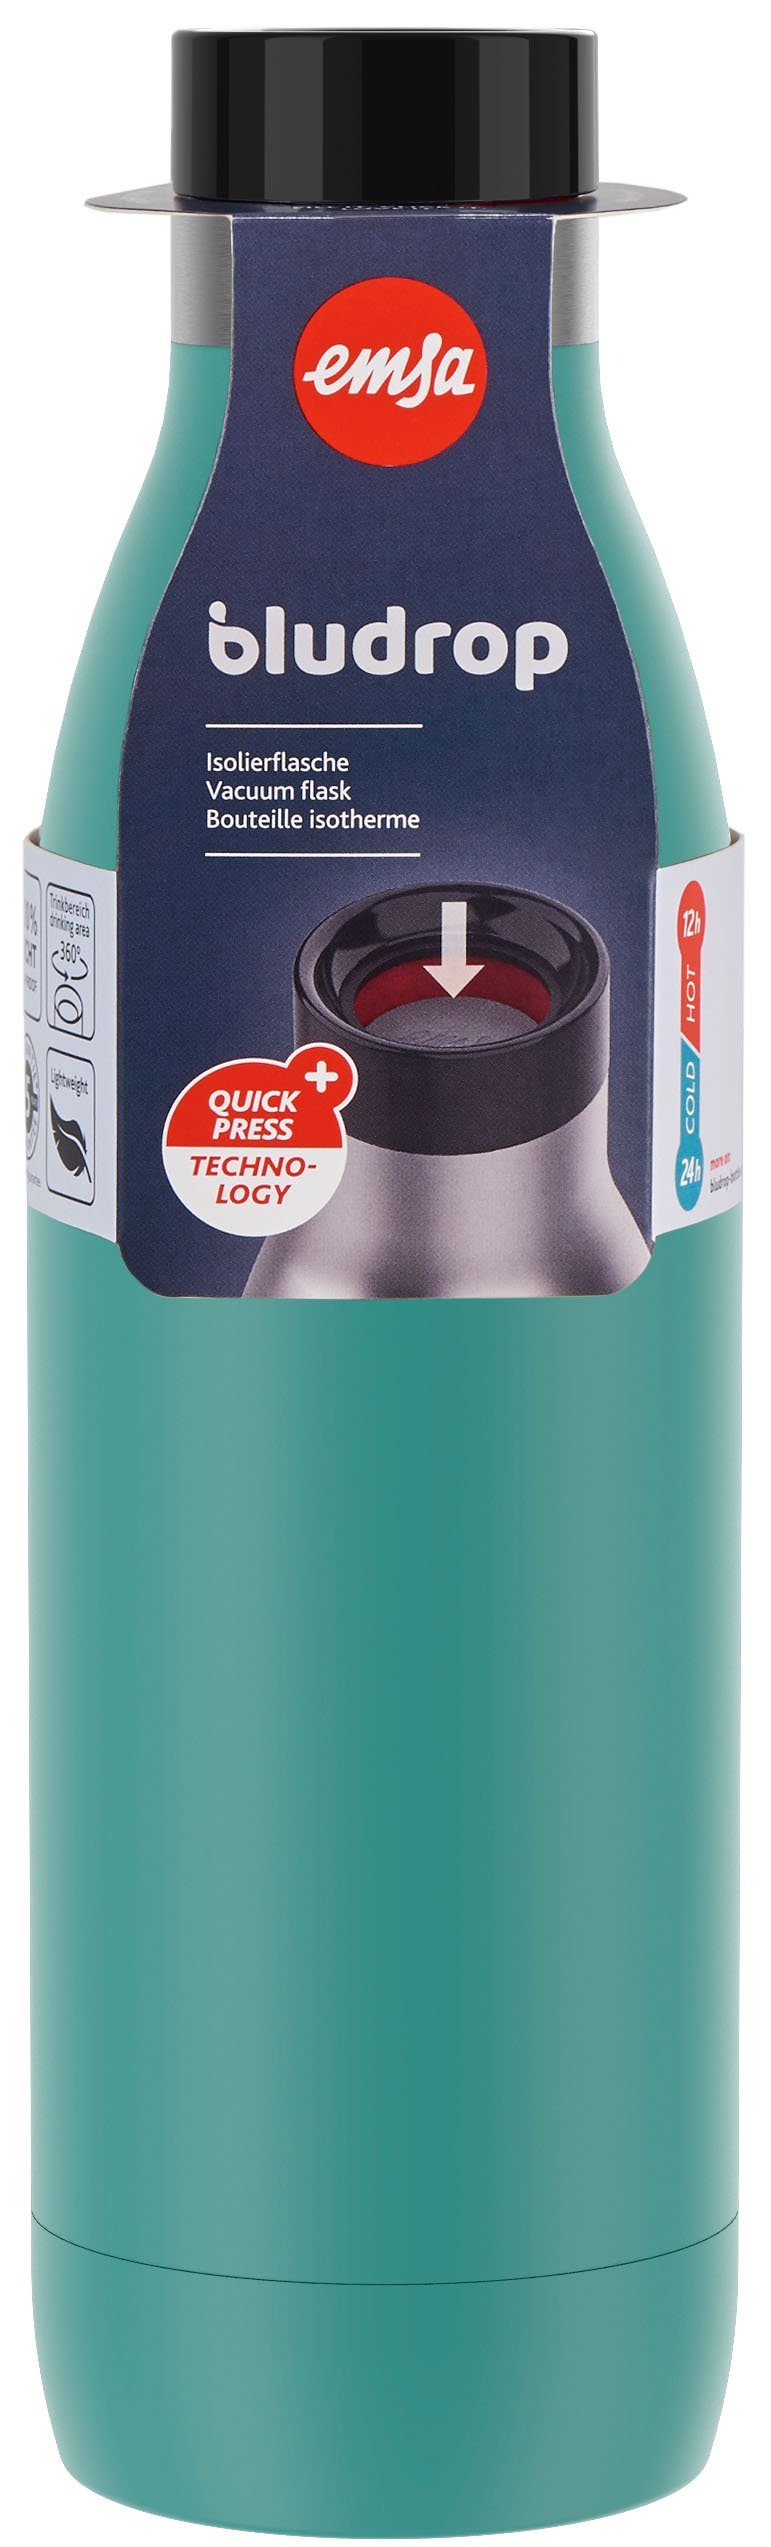 Emsa Trinkflasche Bludrop Quick-Press 12h Deckel, warm/24h Color, spülmaschinenfest Edelstahl, petrol kühl